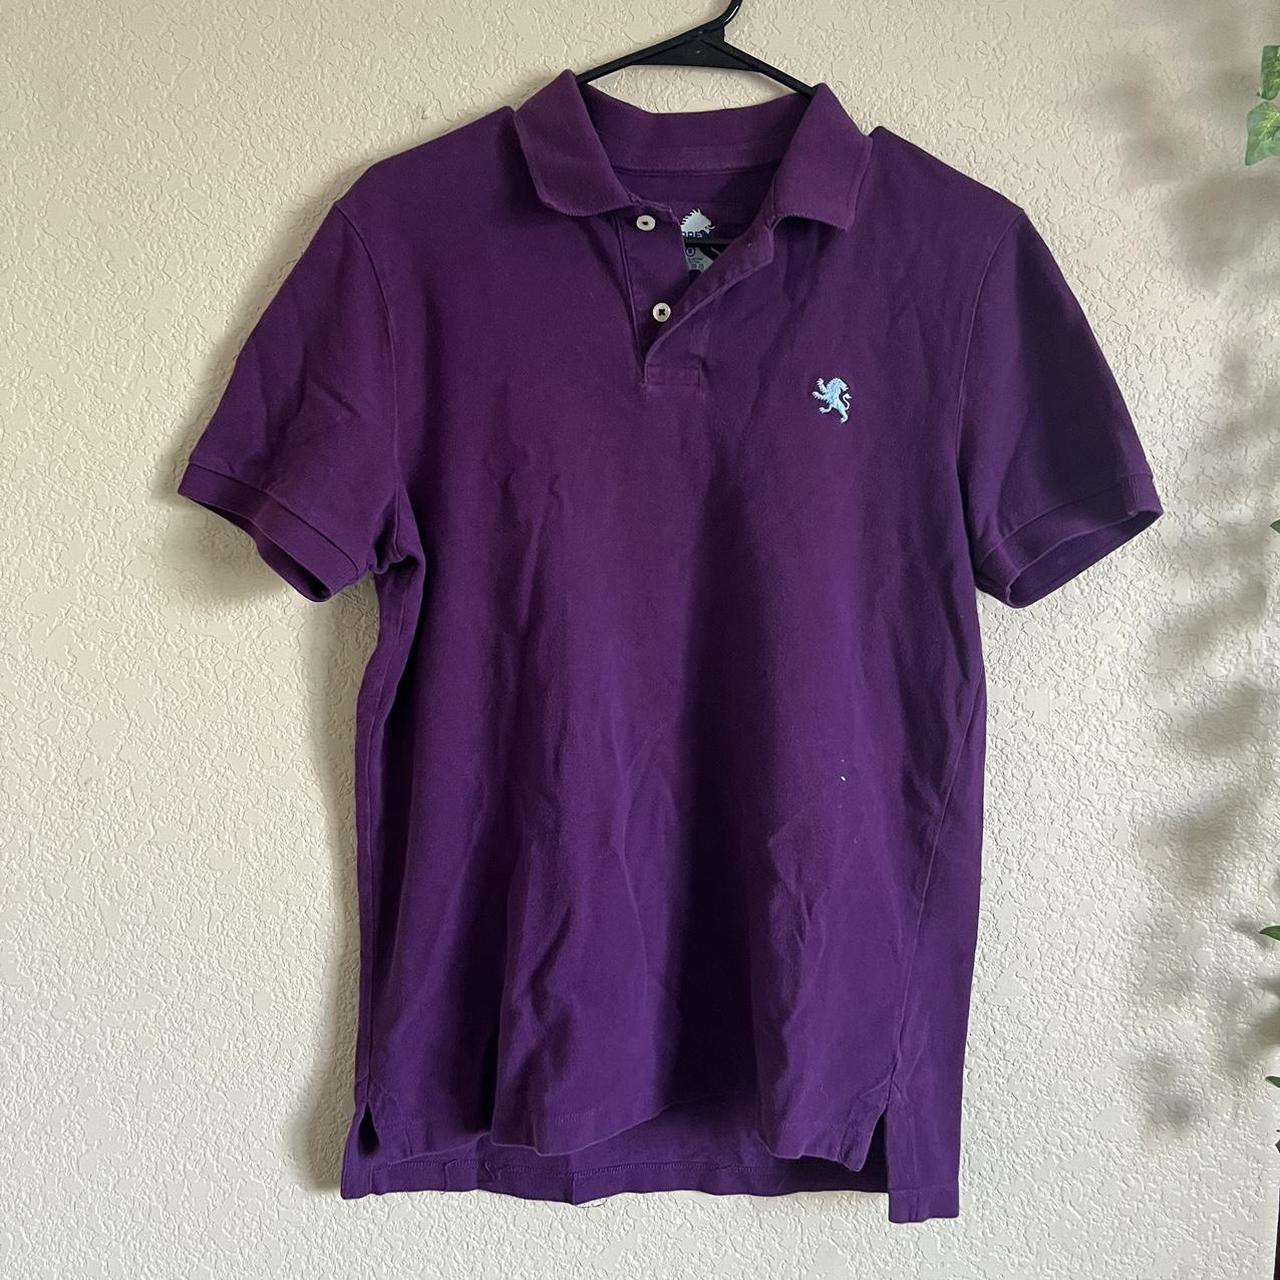 Polo purple shirt with light blue lion #polo #fancy - Depop